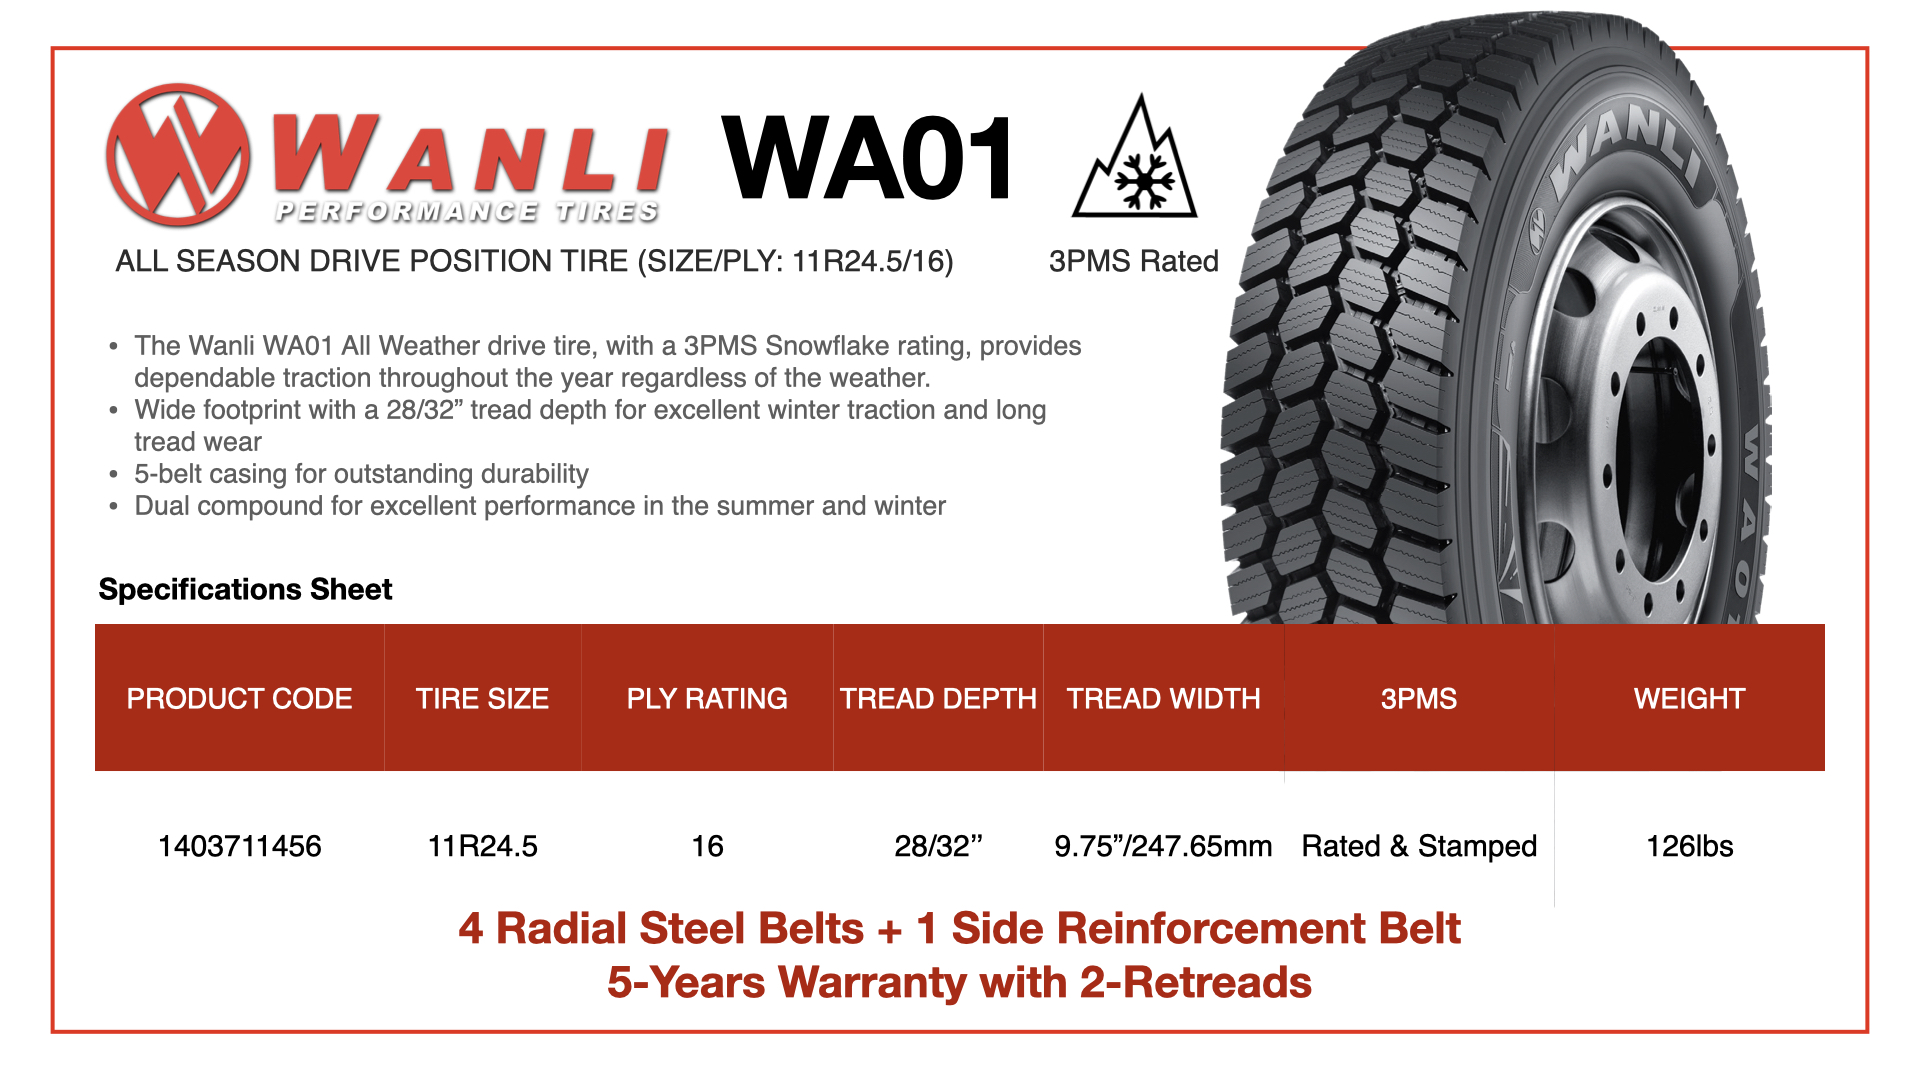 Wanli WA01 11R24.5 Specifications Sheet